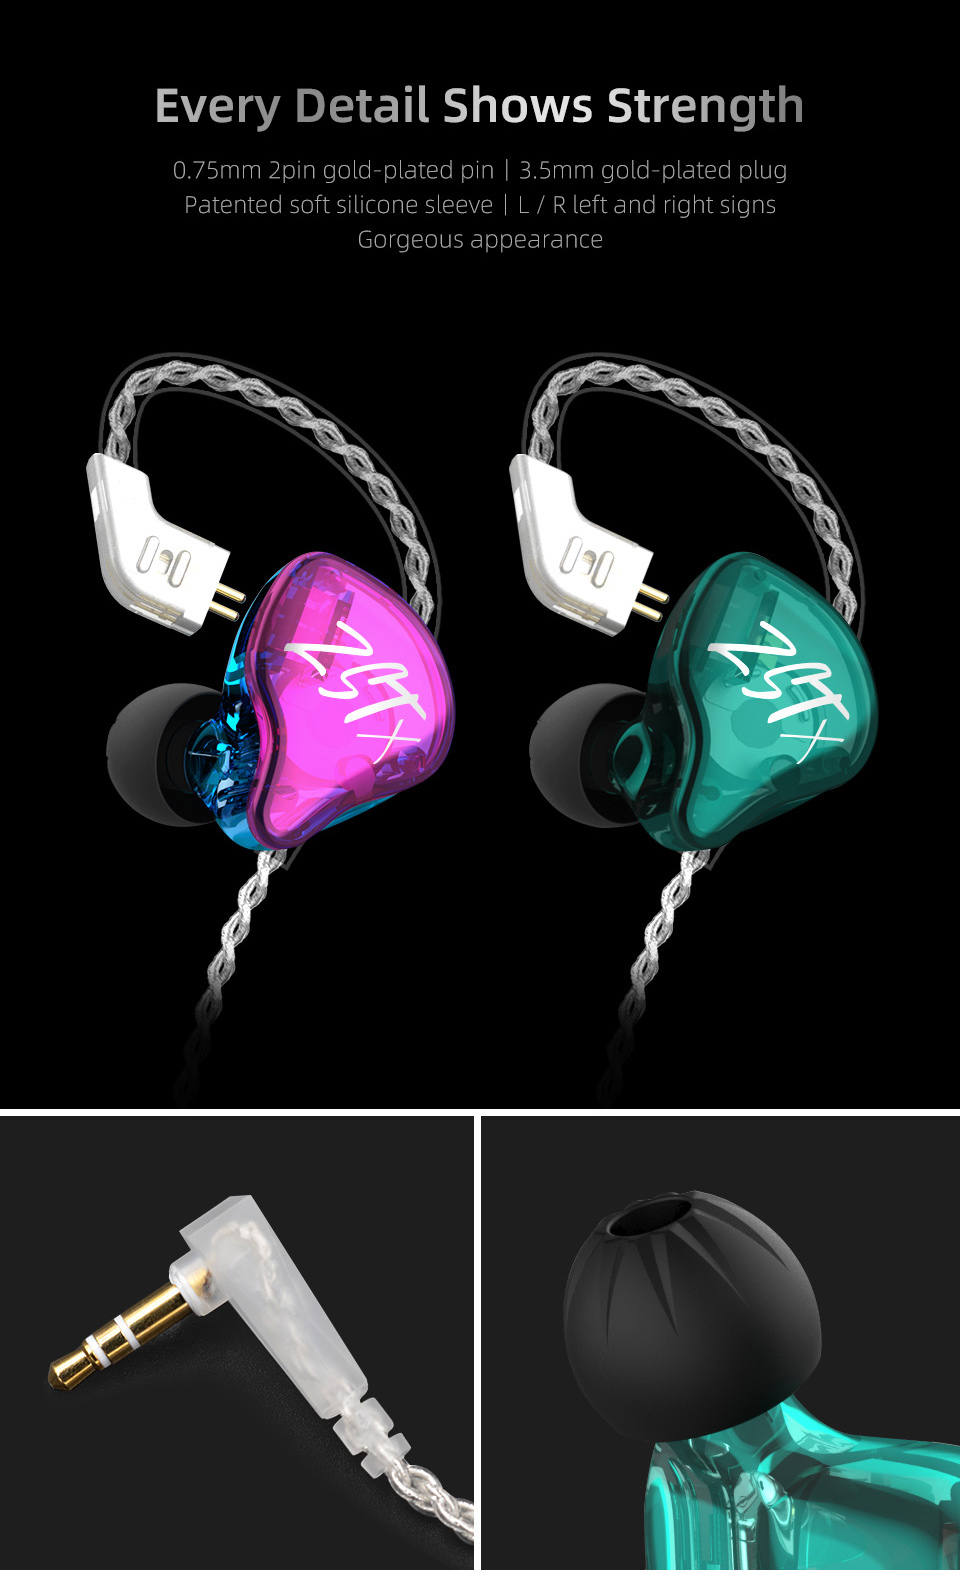 KZ-ZSTx-HiFi-Earphone-35mm-Jack-Earbuds-Balanced-Armature-Dynamic-Drivers-In-ear-Bass-Earphone-Headp-1716715-10